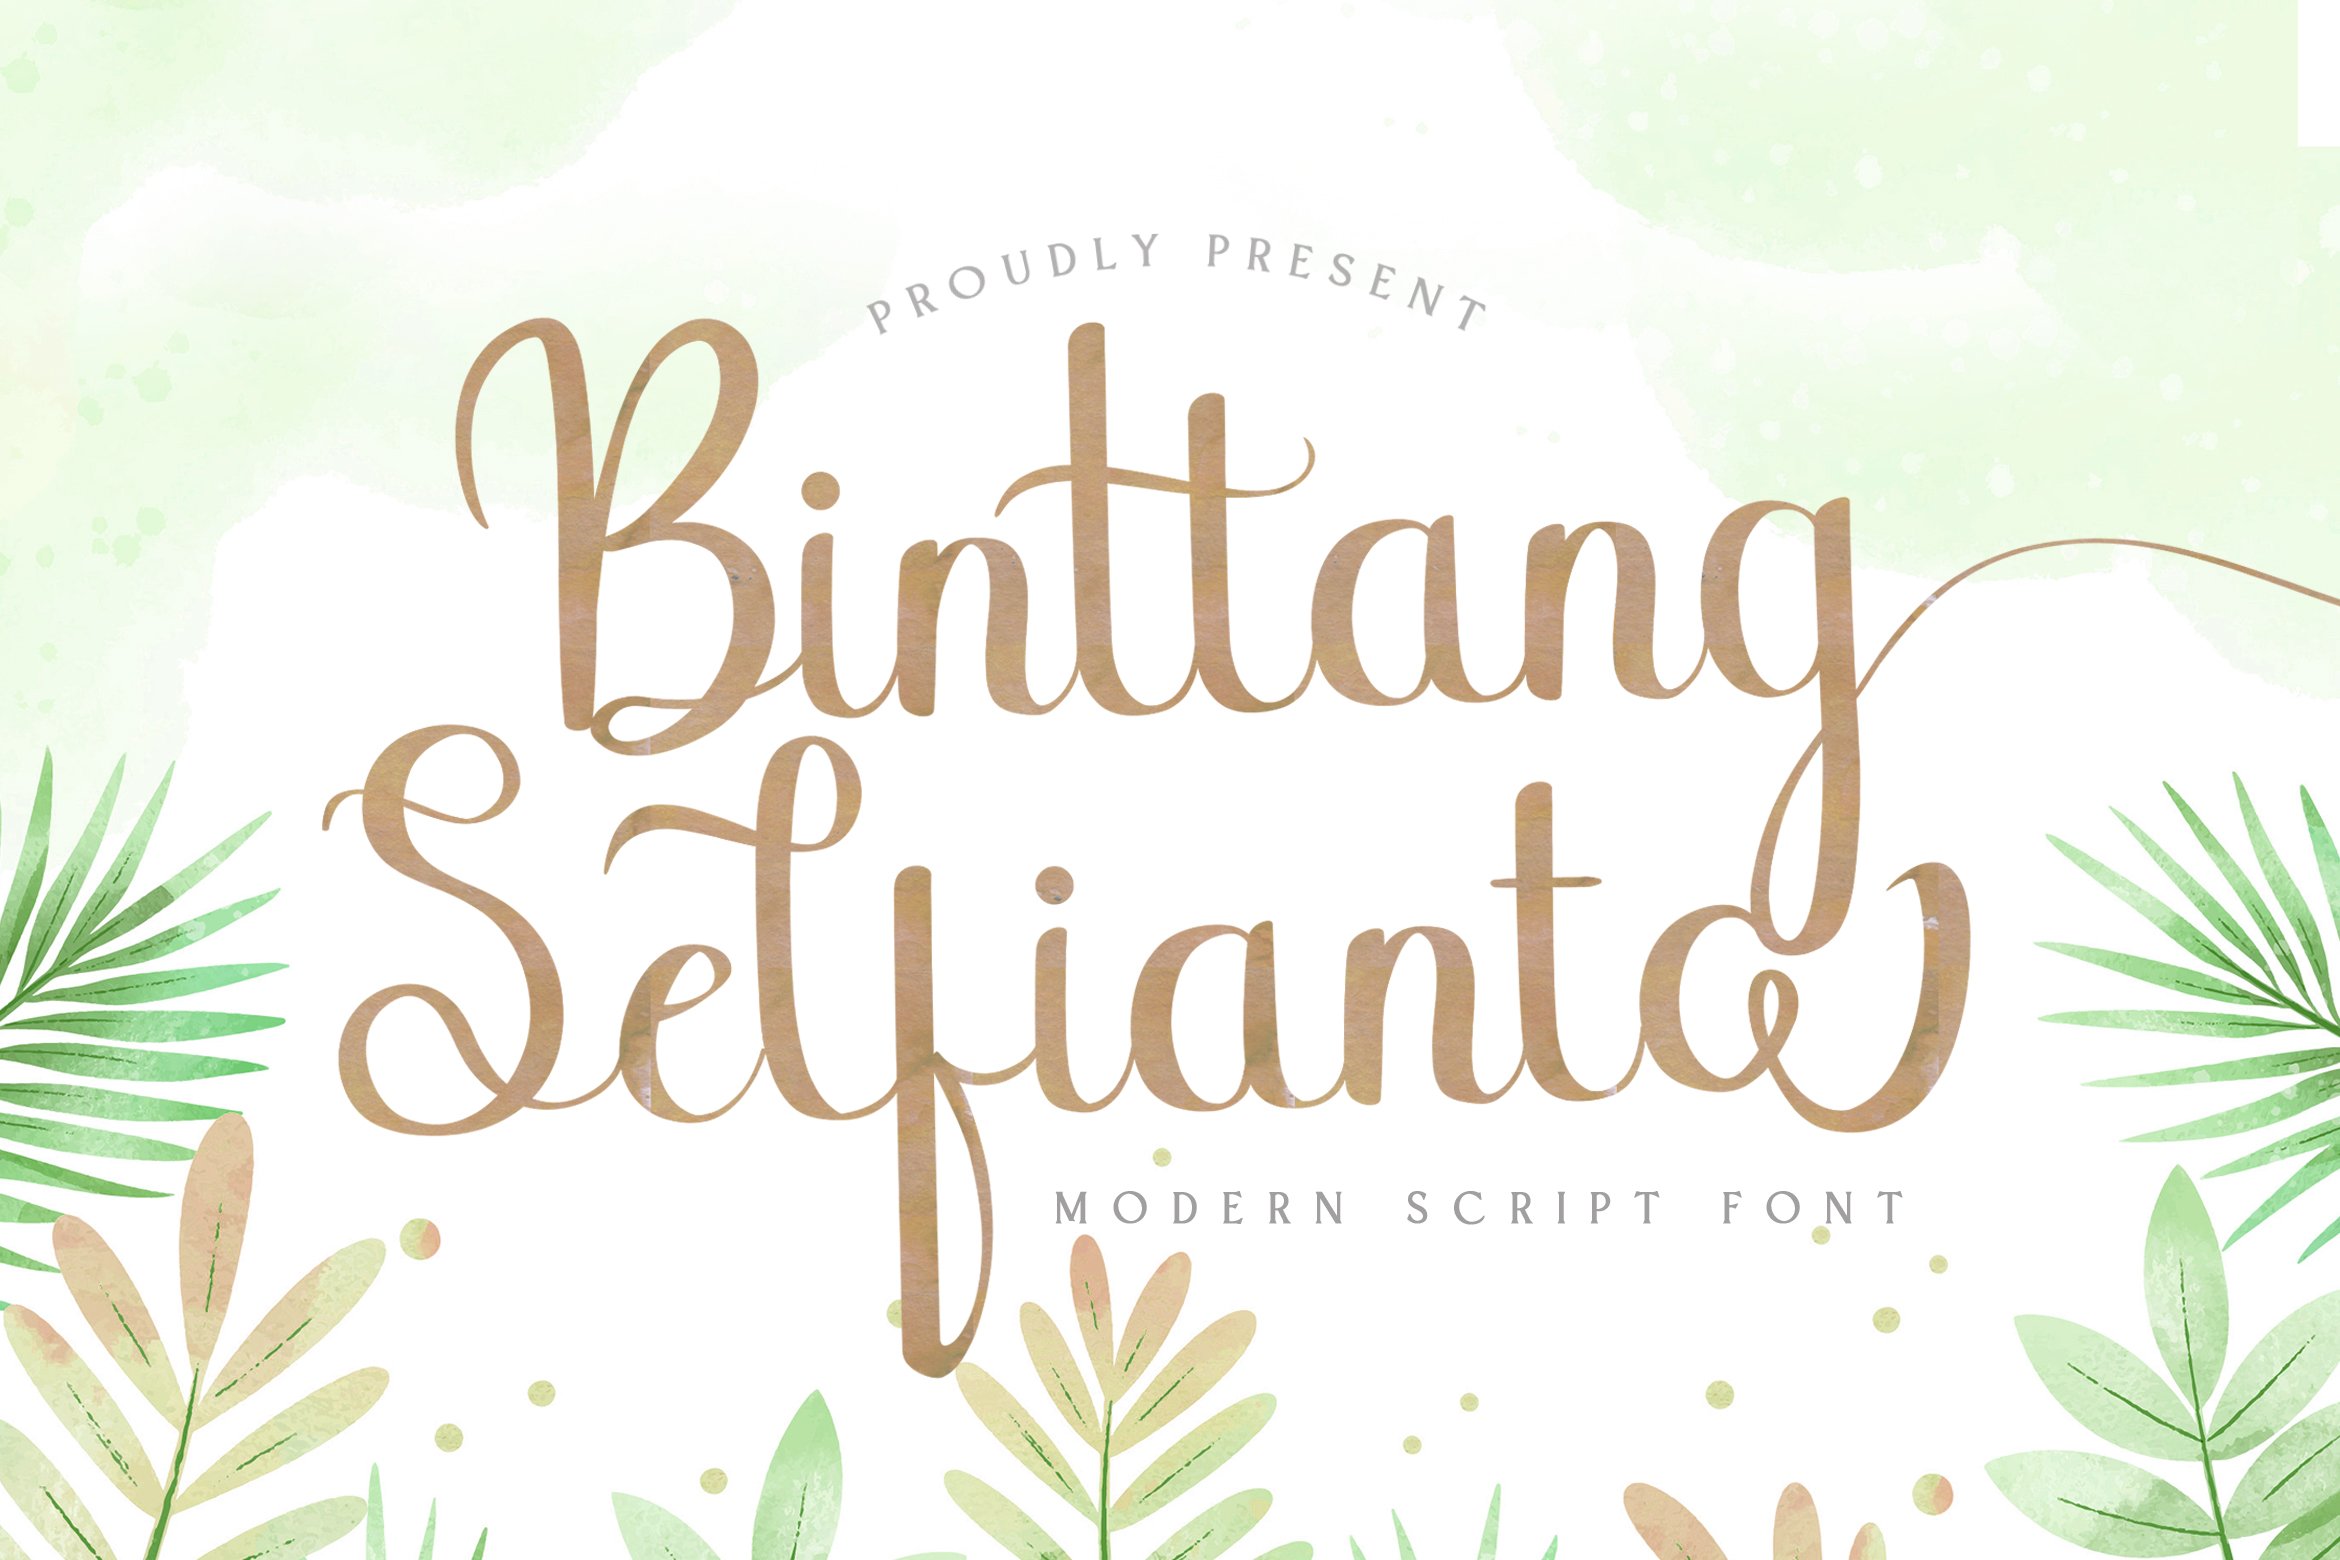 Binttang Selfianto - Script Font cover image.